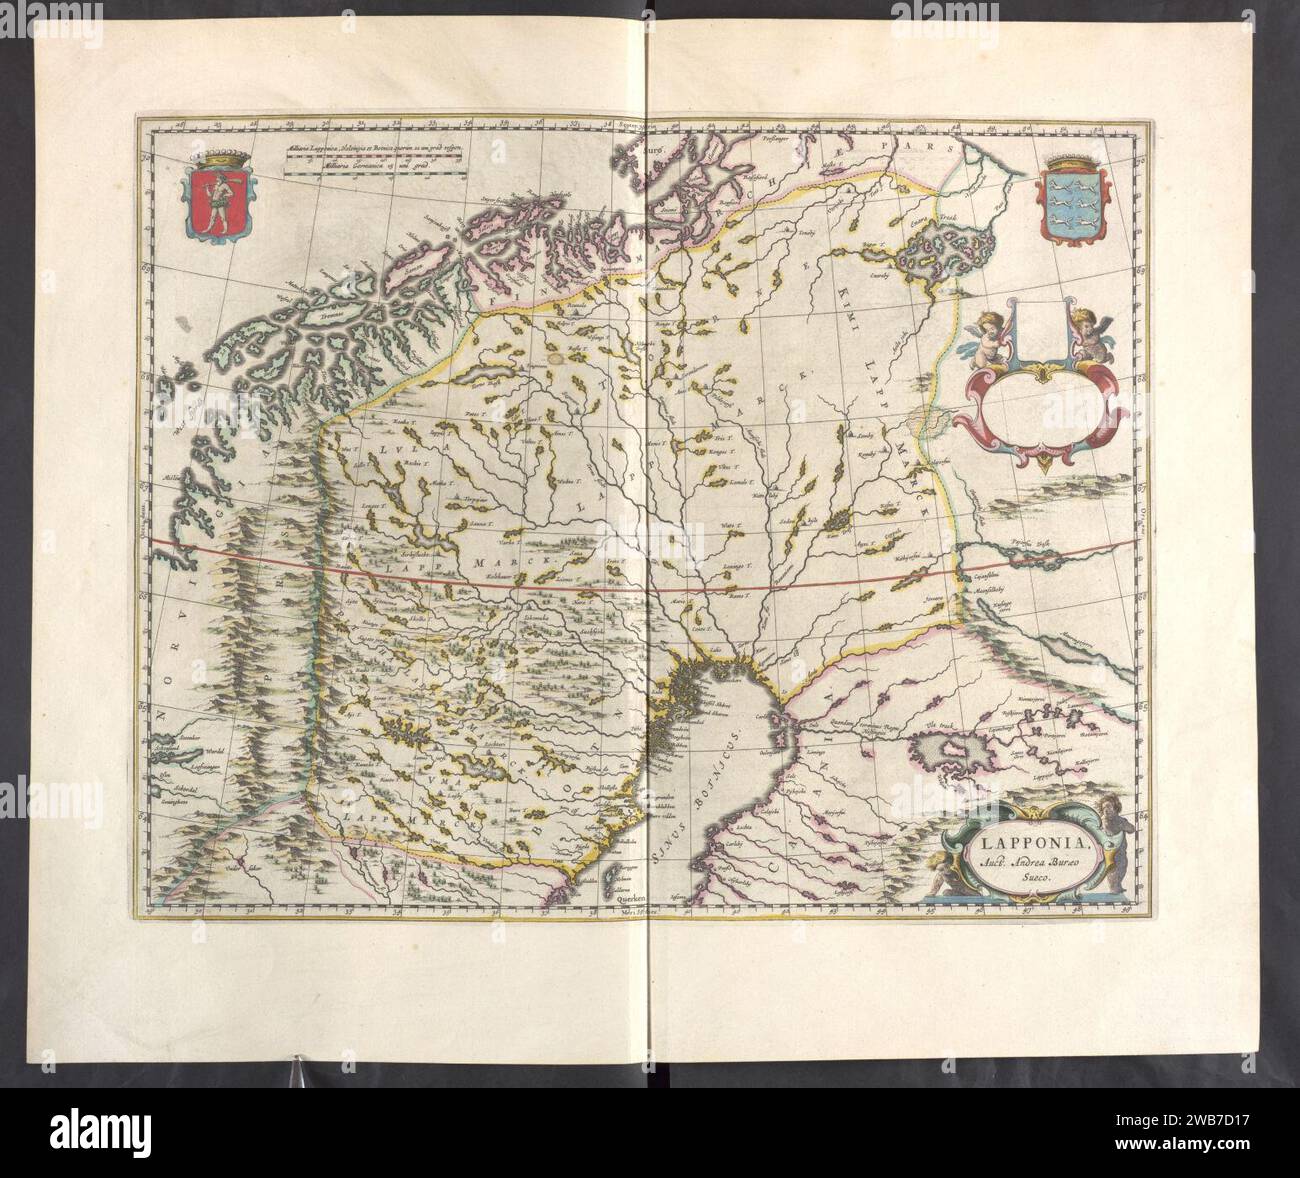 Lapponia - Atlas Maior, Band 2, Karte 6 - Joan Blaeu, 1667 Stockfoto